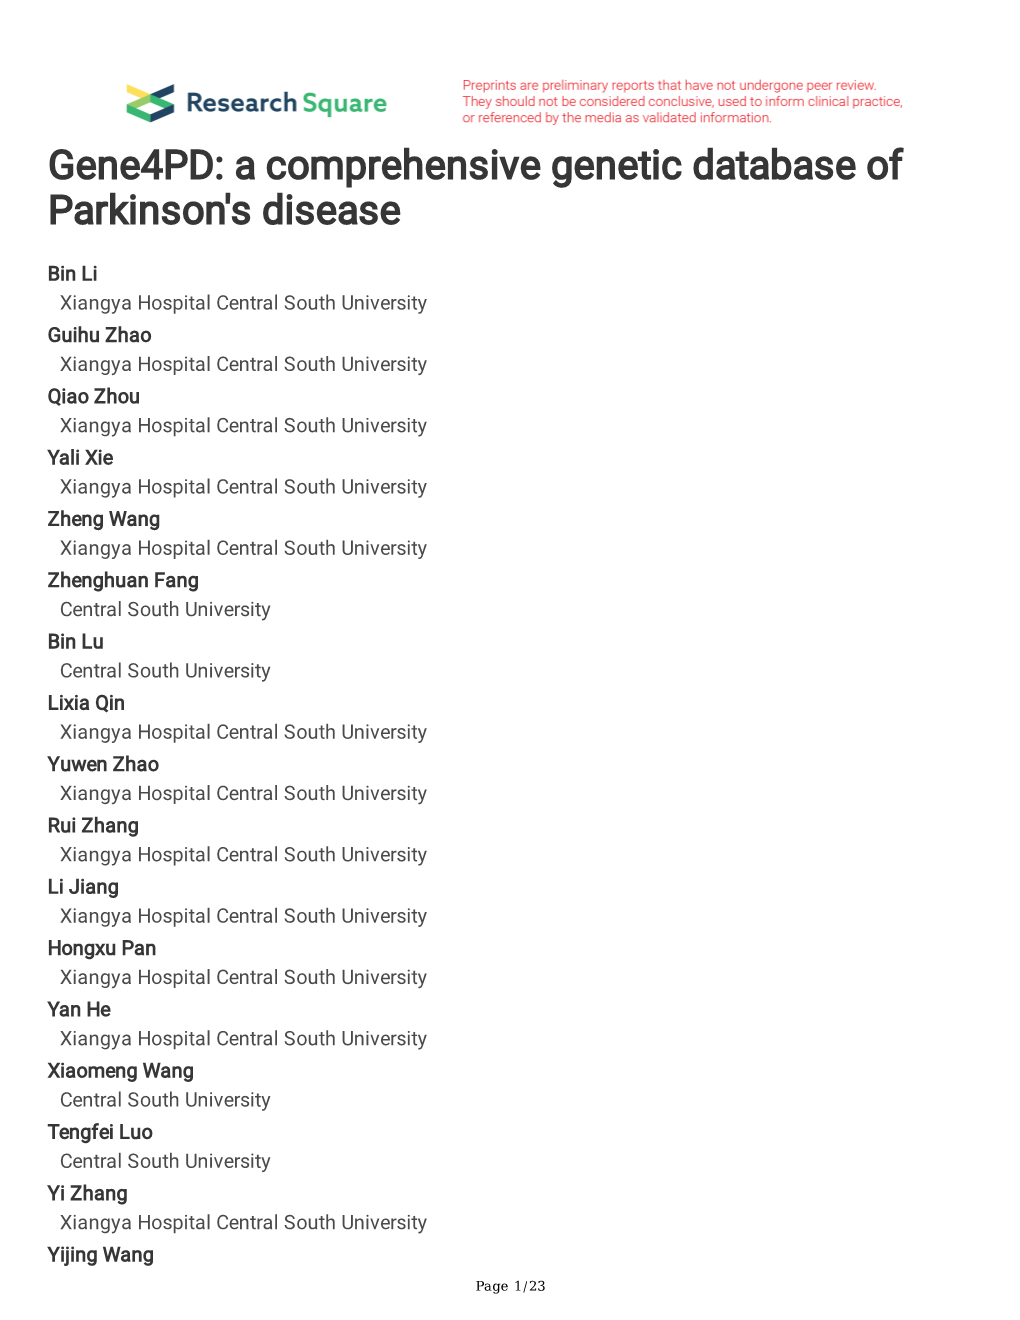 A Comprehensive Genetic Database of Parkinson's Disease